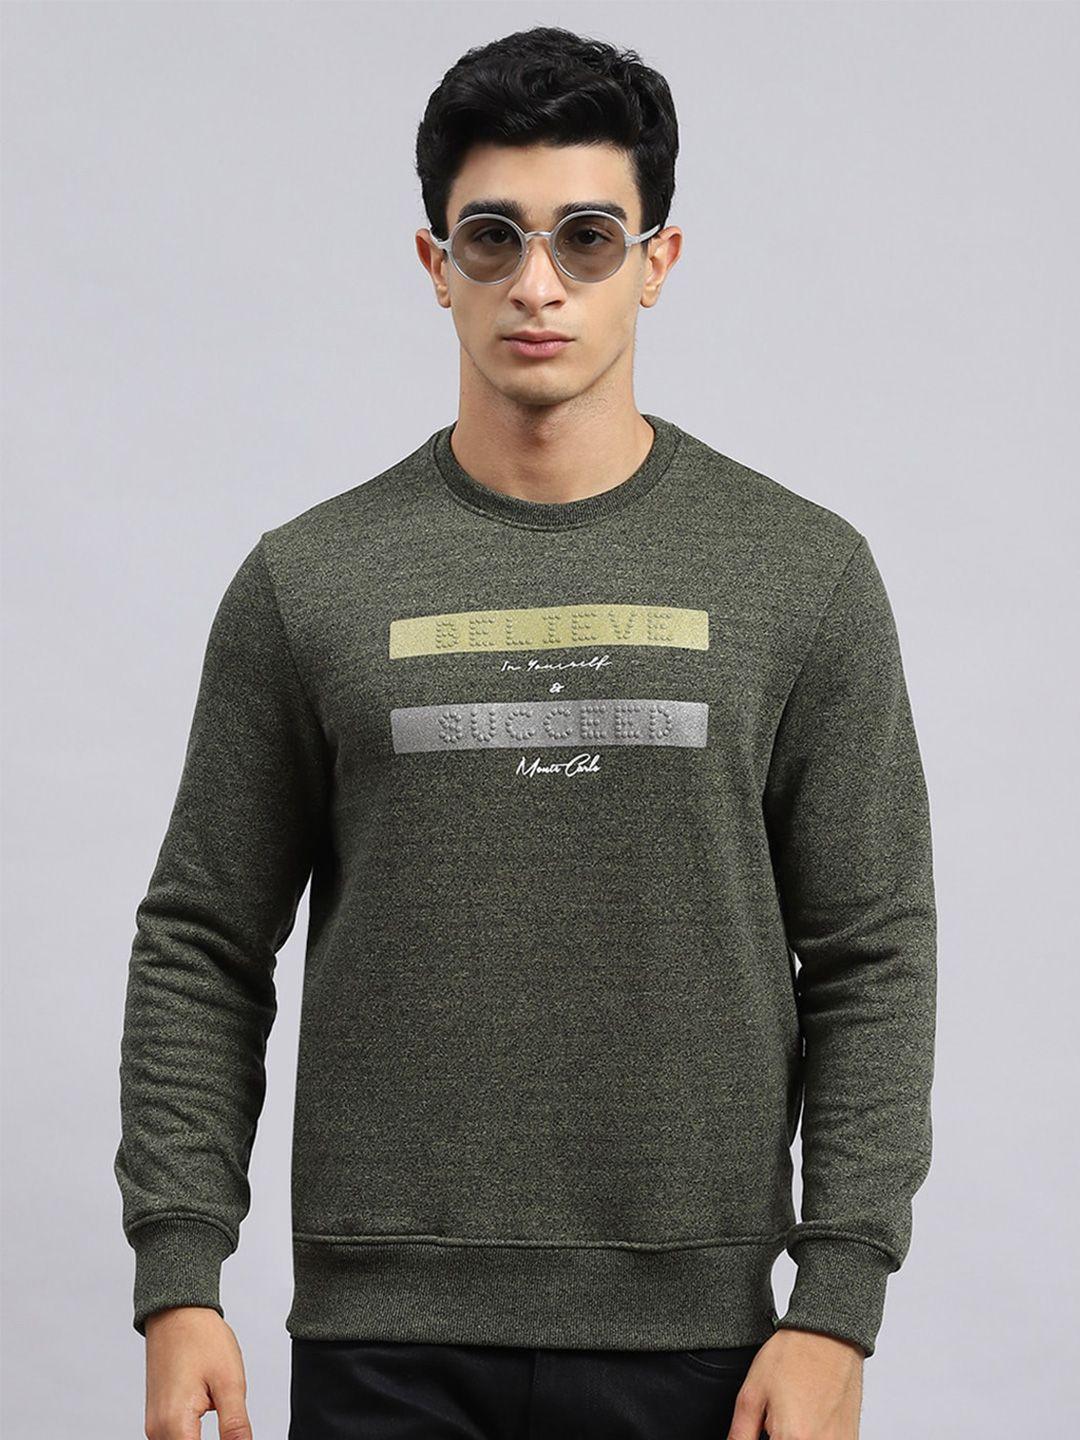 monte carlo typography printed pullover sweatshirt